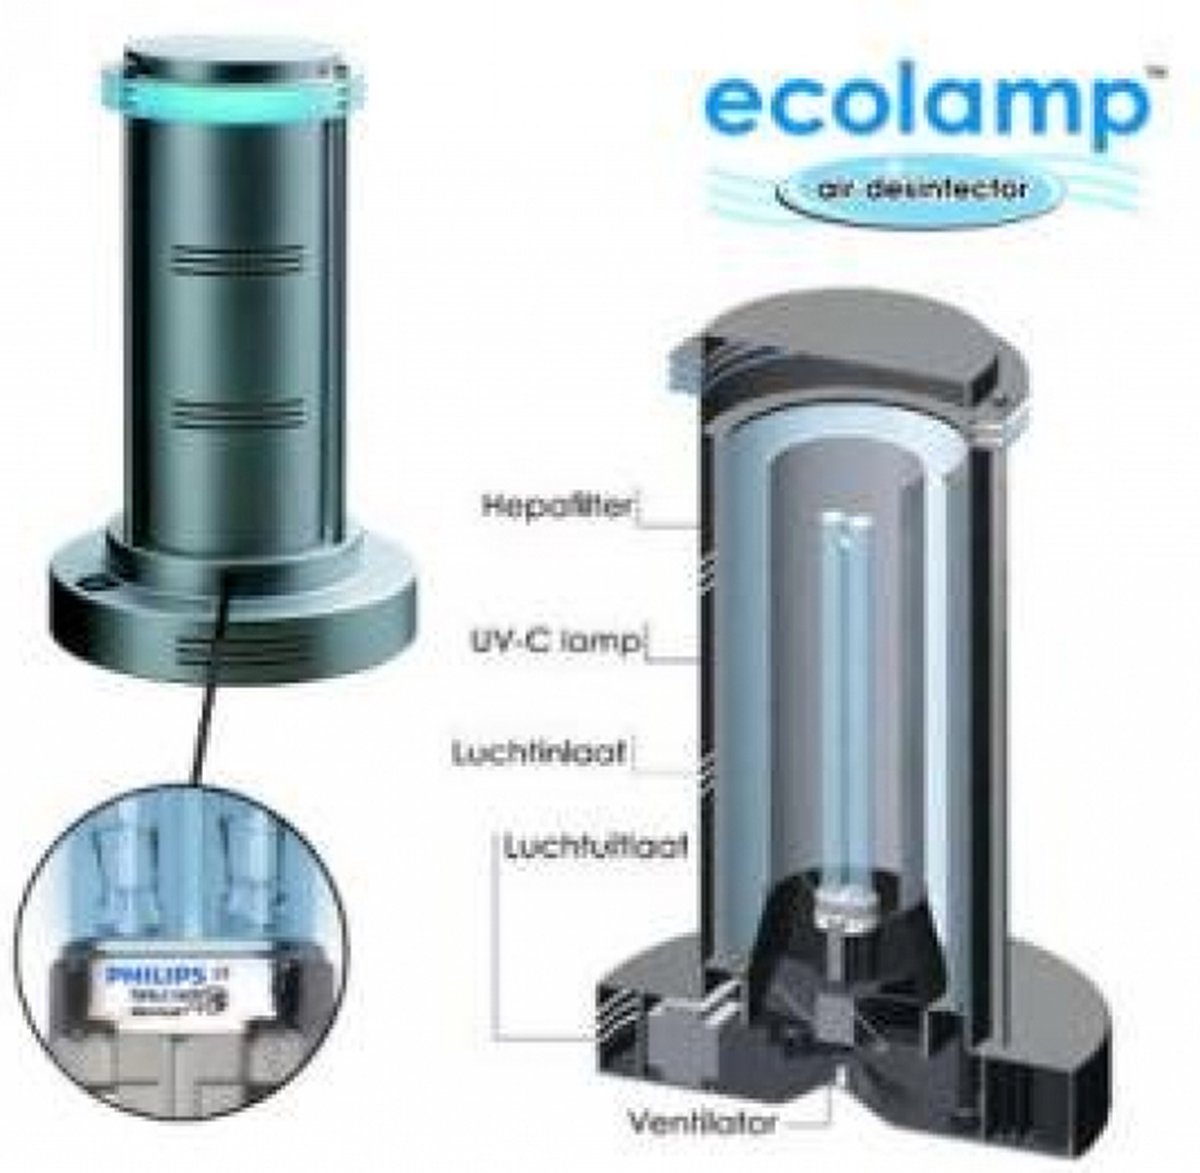 Ecolamp - Luchtreiniger met uv-c lamp | bol